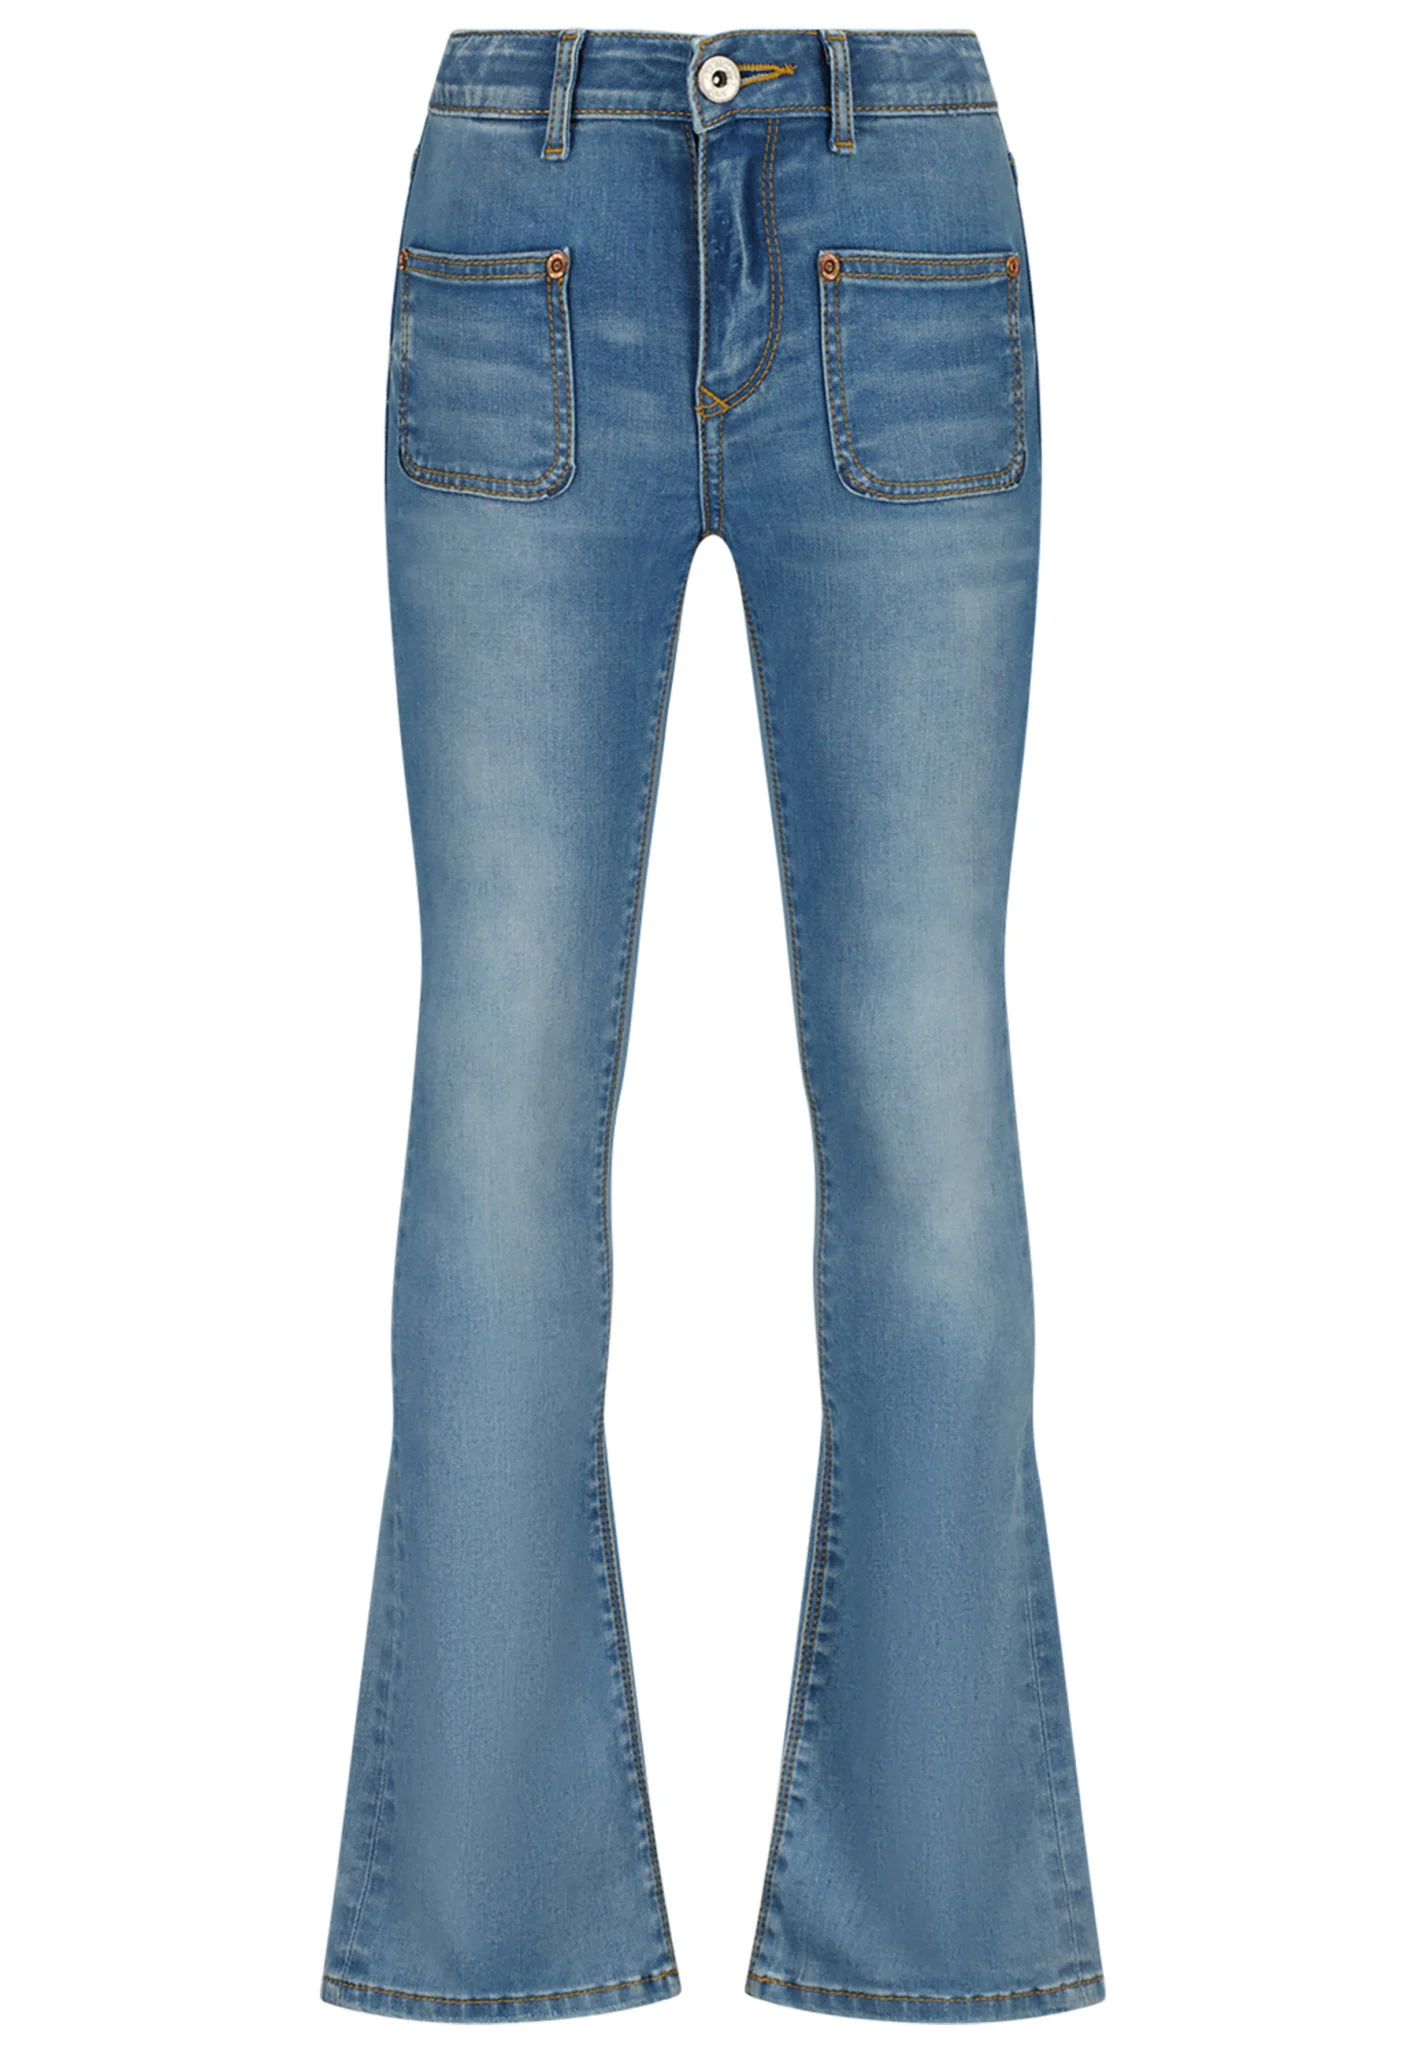 Afbeelding van Vingino Meiden jeans britte blue vintage